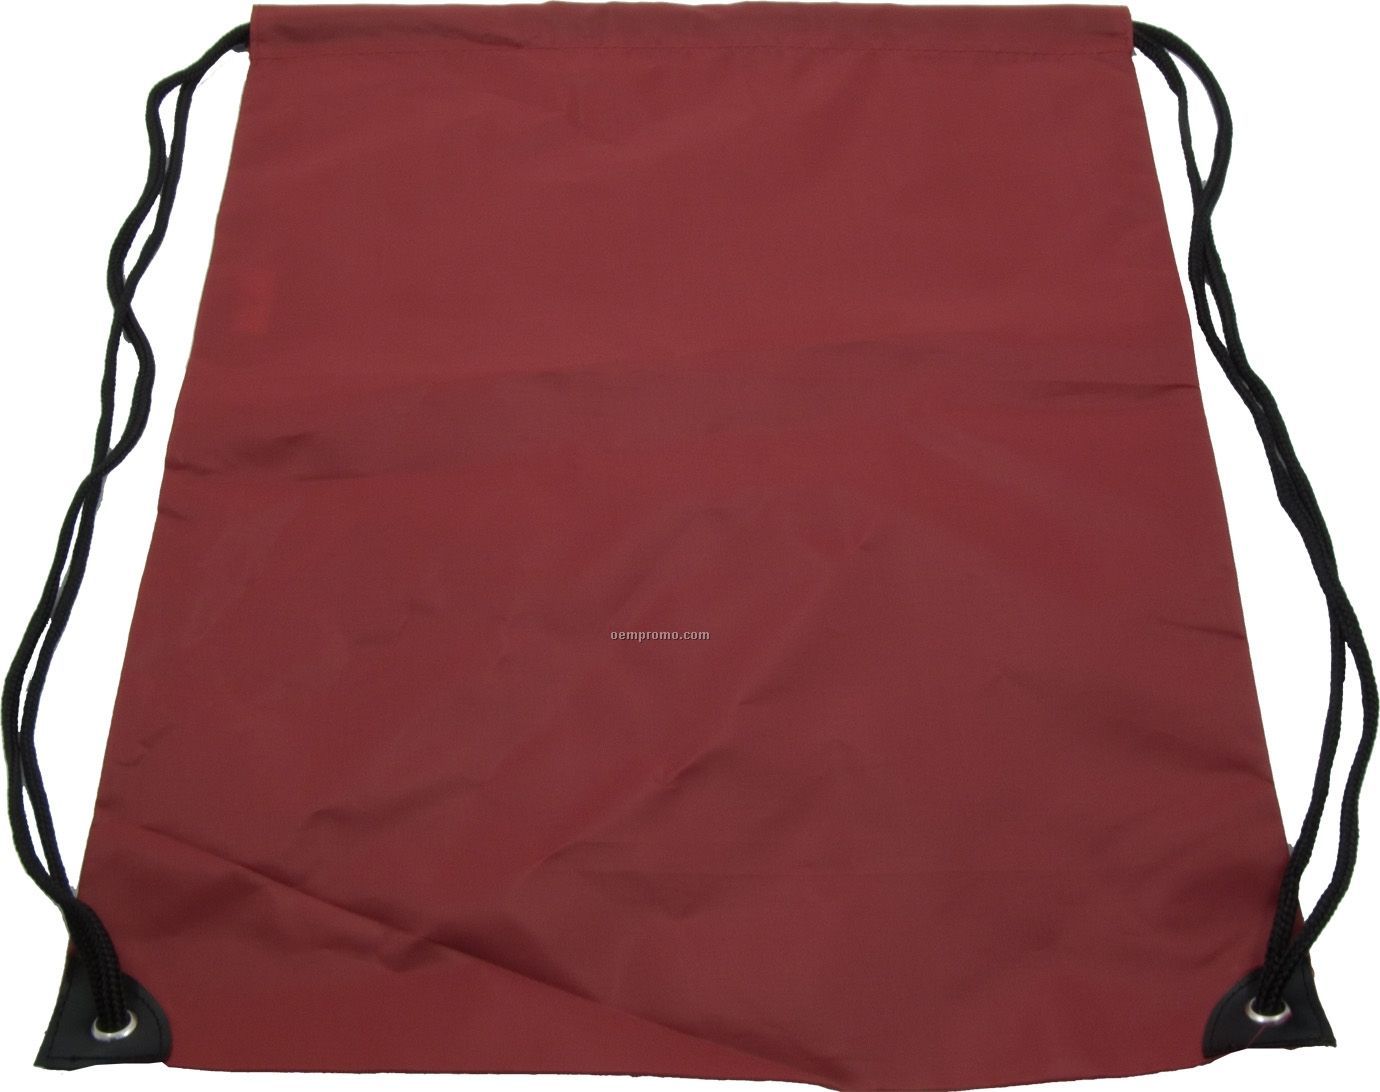 210 Denier Fabric Drawstring Bag (Overseas 6-7 Week Delivery)